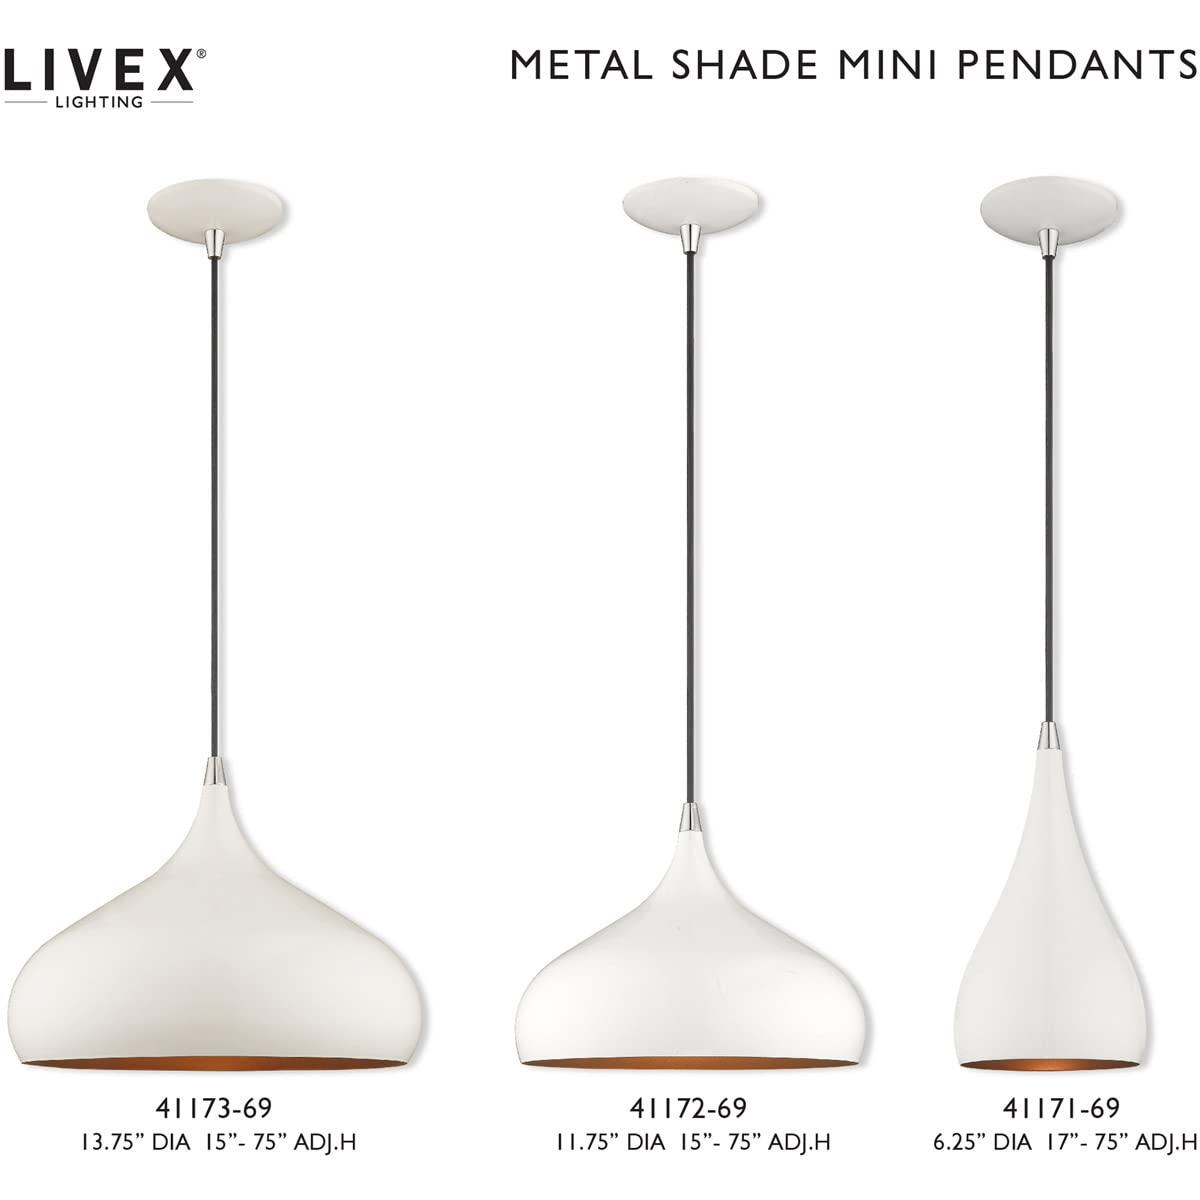 Livex Lighting 41171-69 Metal Shade - 6.25" One Light Mini Pendant, Shiny White Finish with Shiny White Metal/Gold Shade